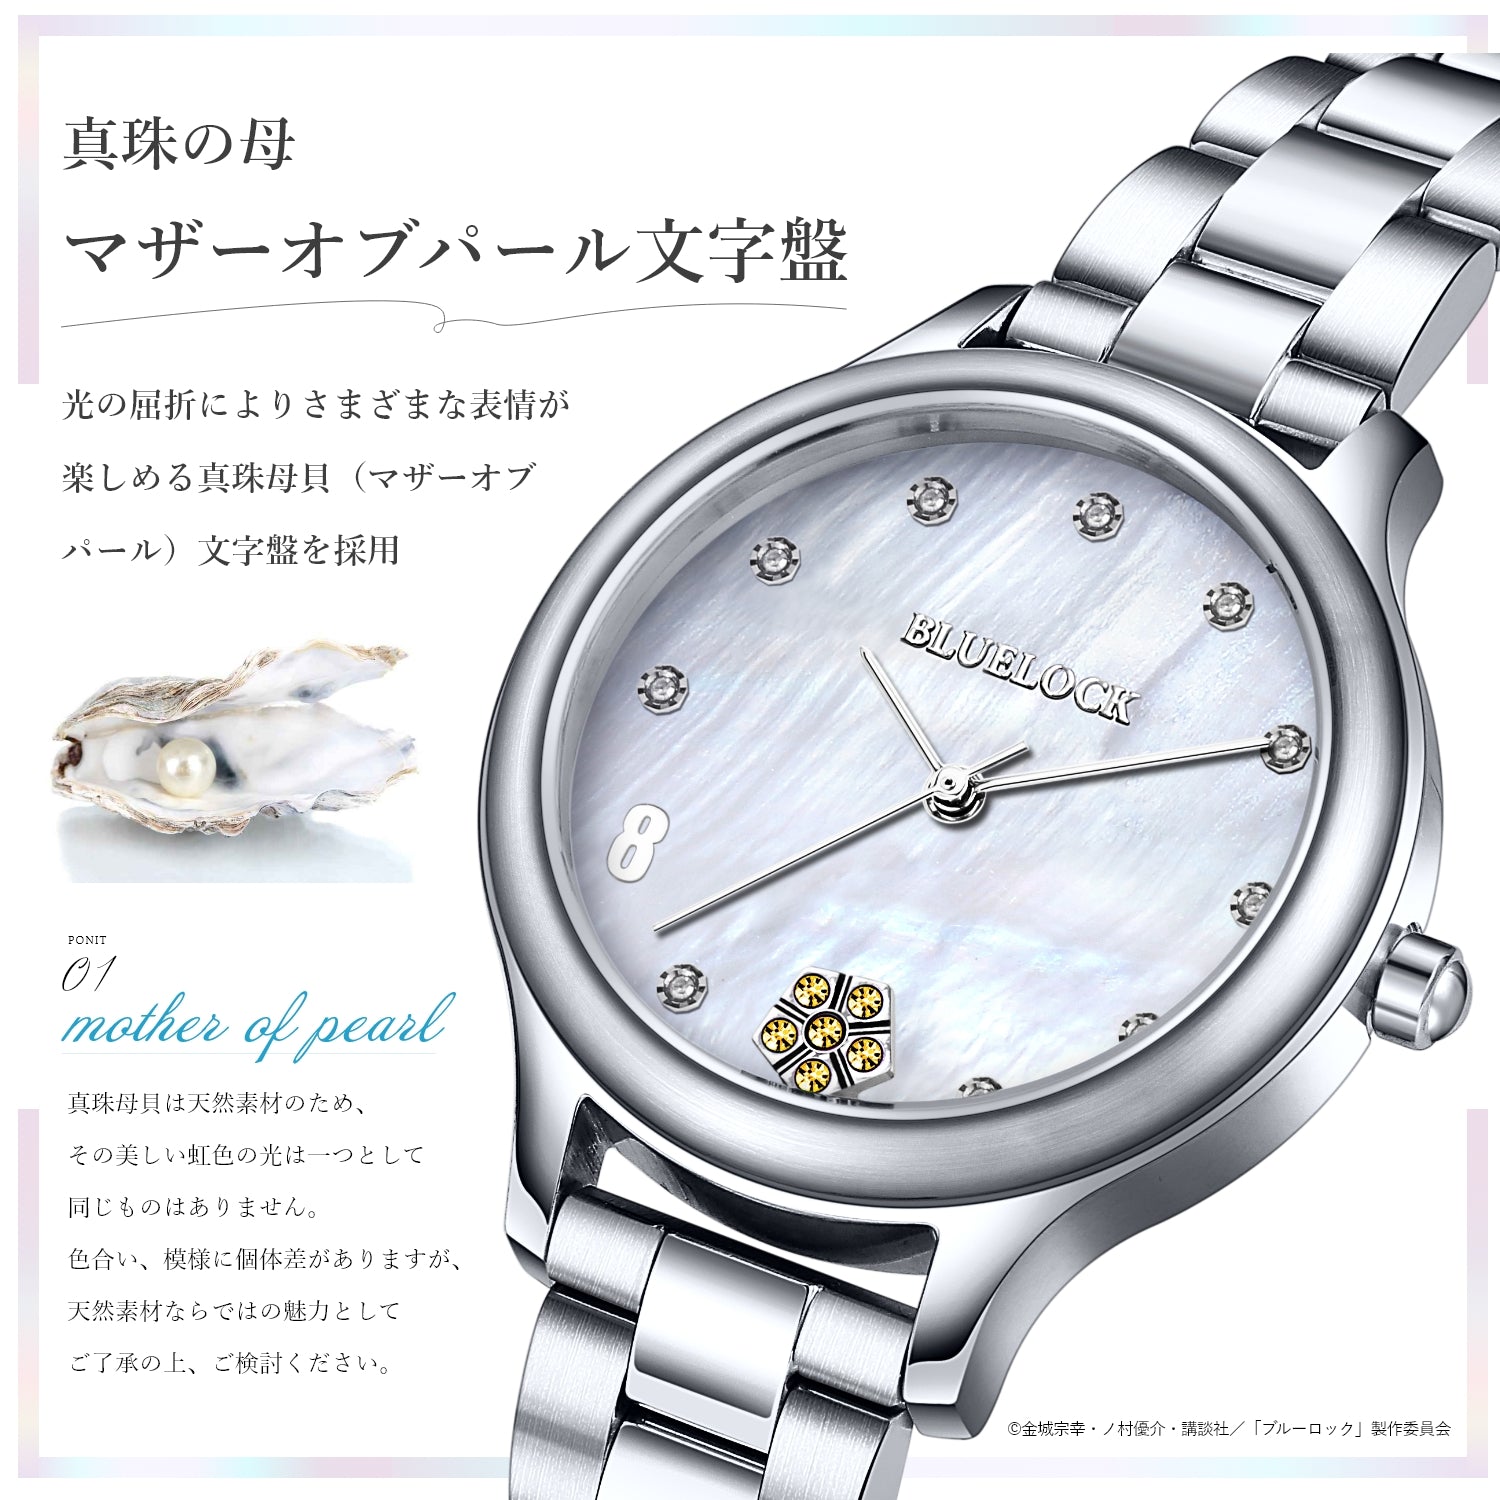 TV anime"BLUELOCK"Moving Jewelry wristwatch with Natural Diamonds Meguru Bachira